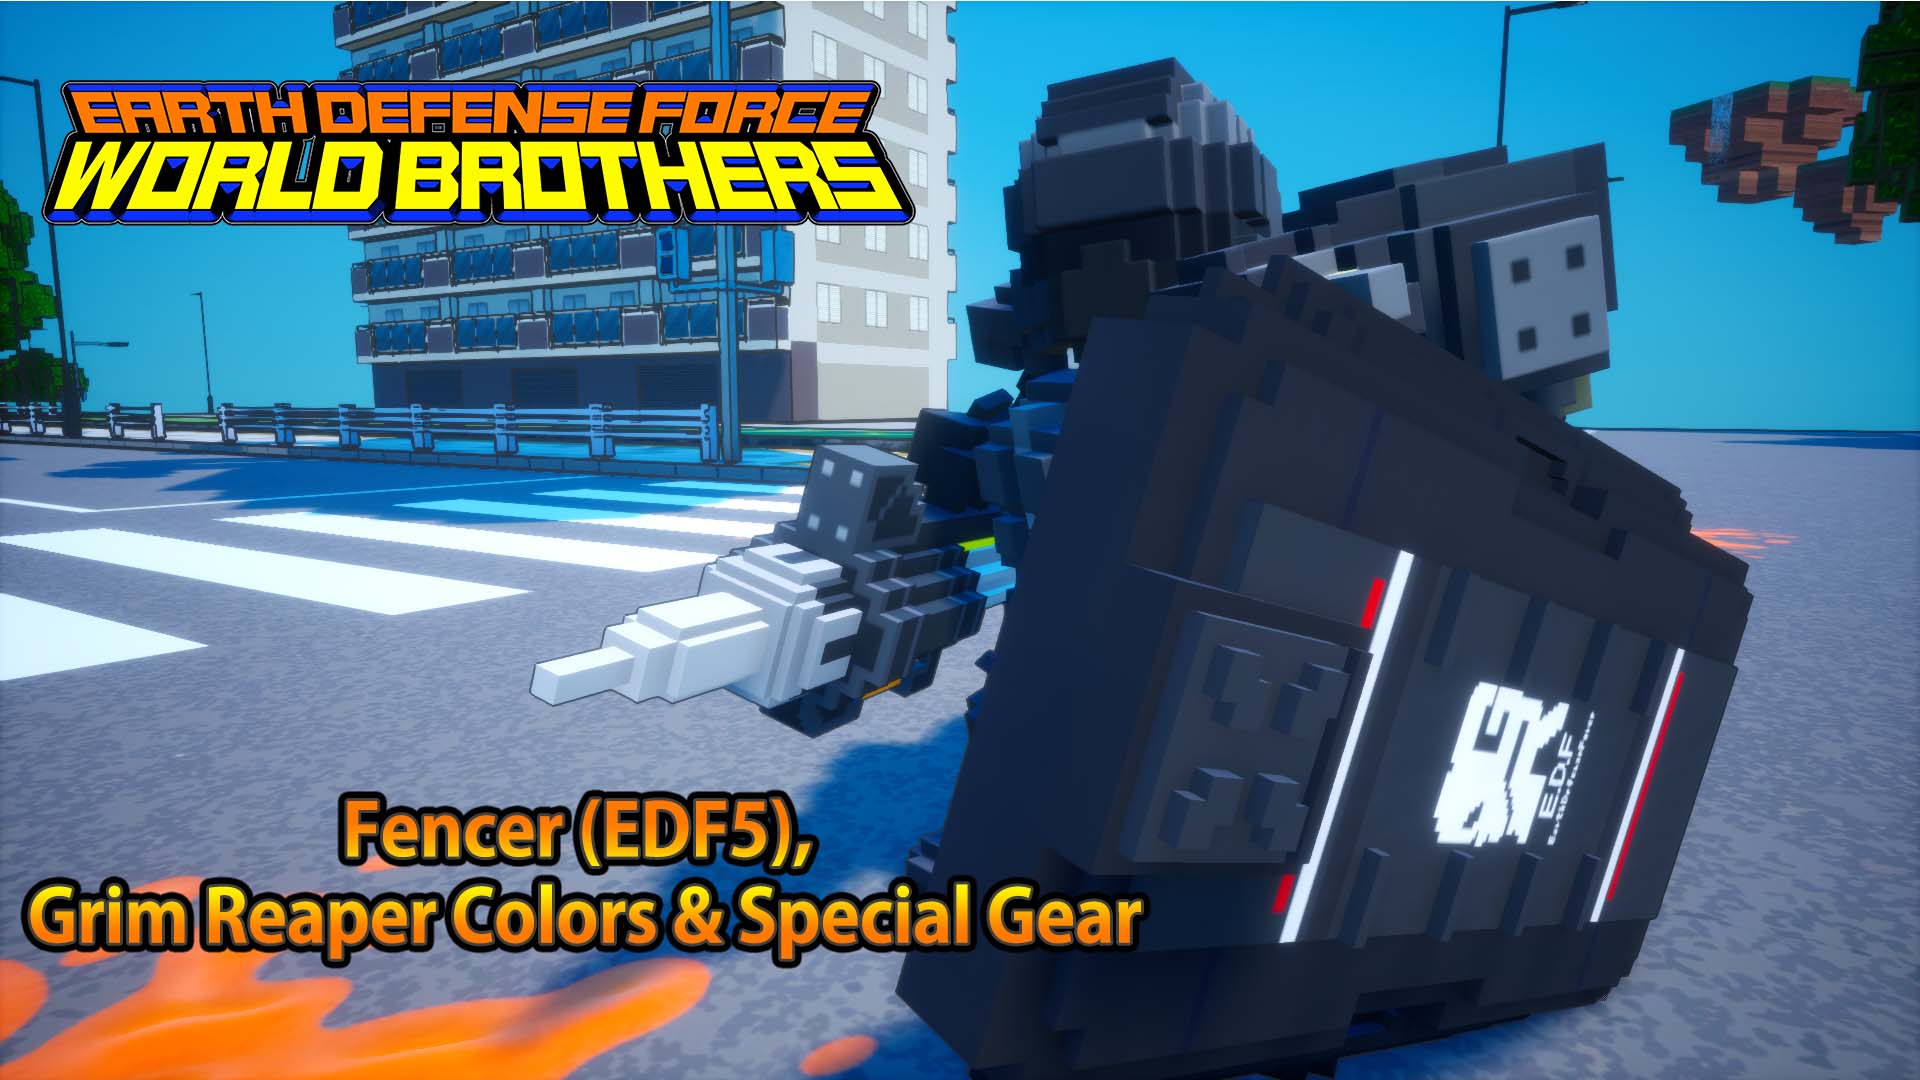 Fencer (EDF5), Grim Reaper Colors & Special Gear